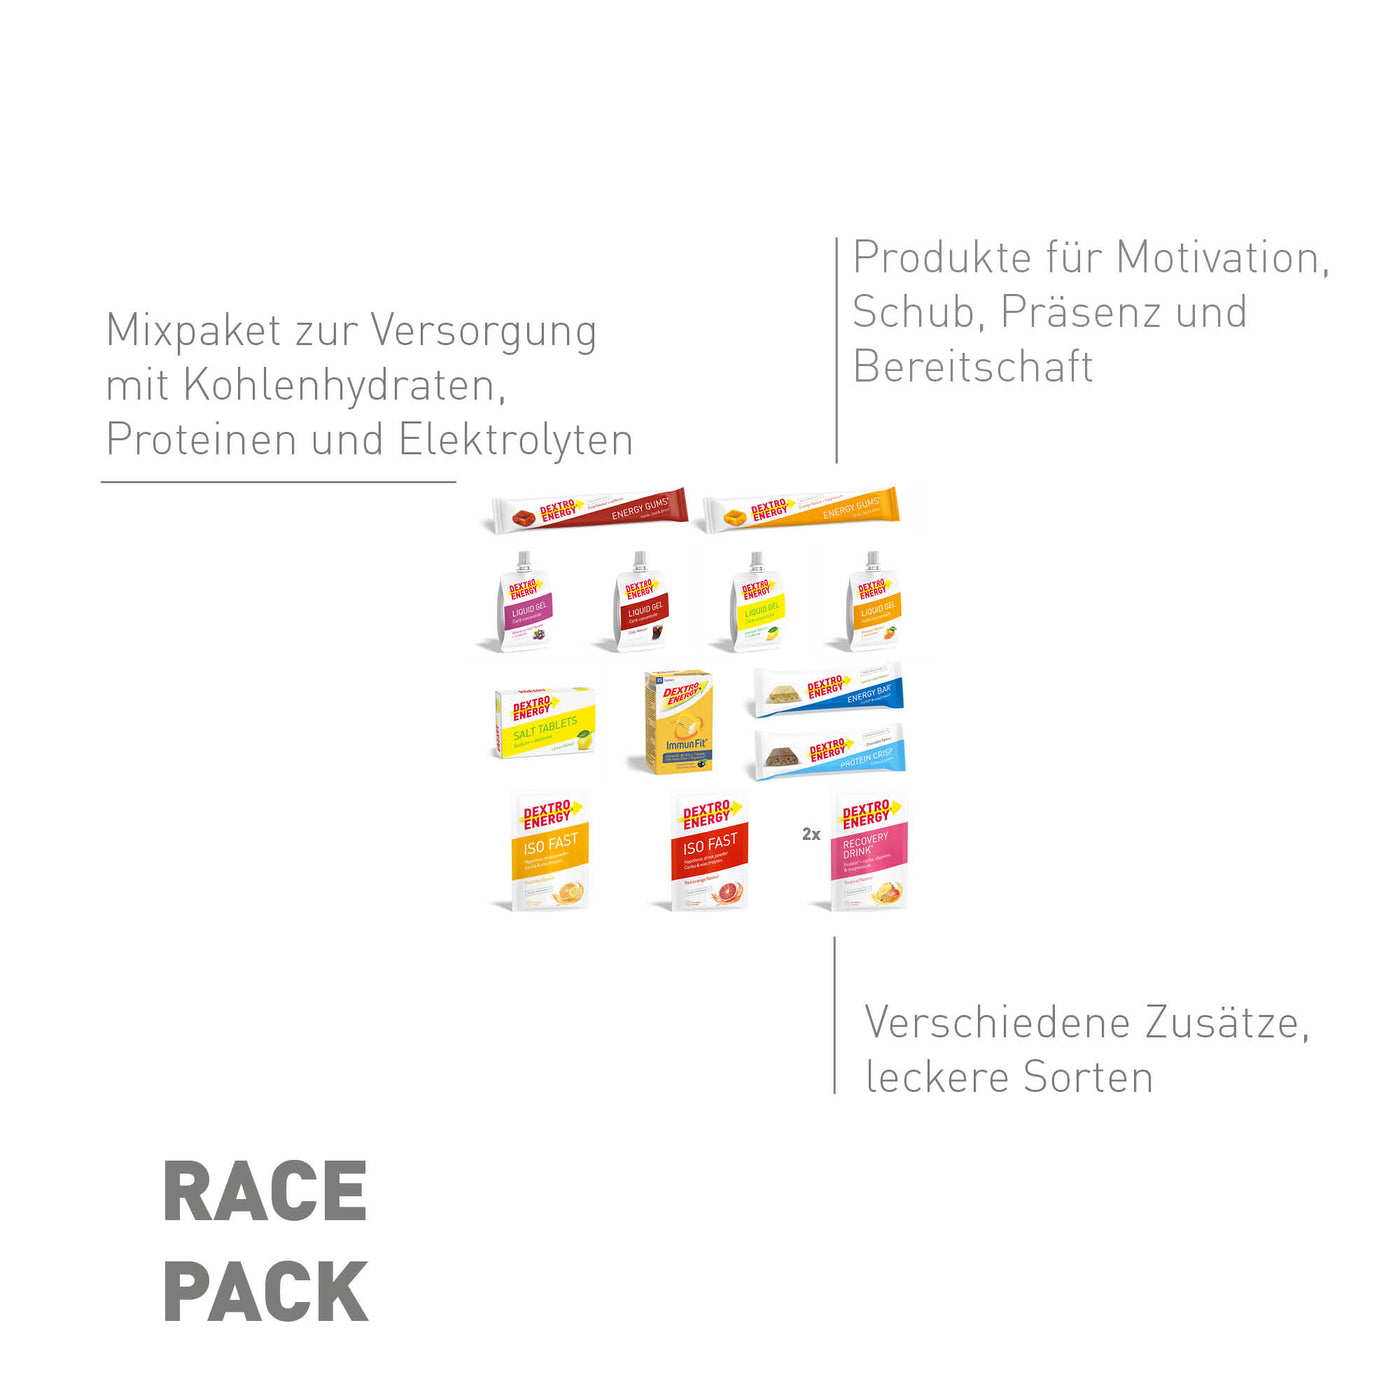 Race Pack